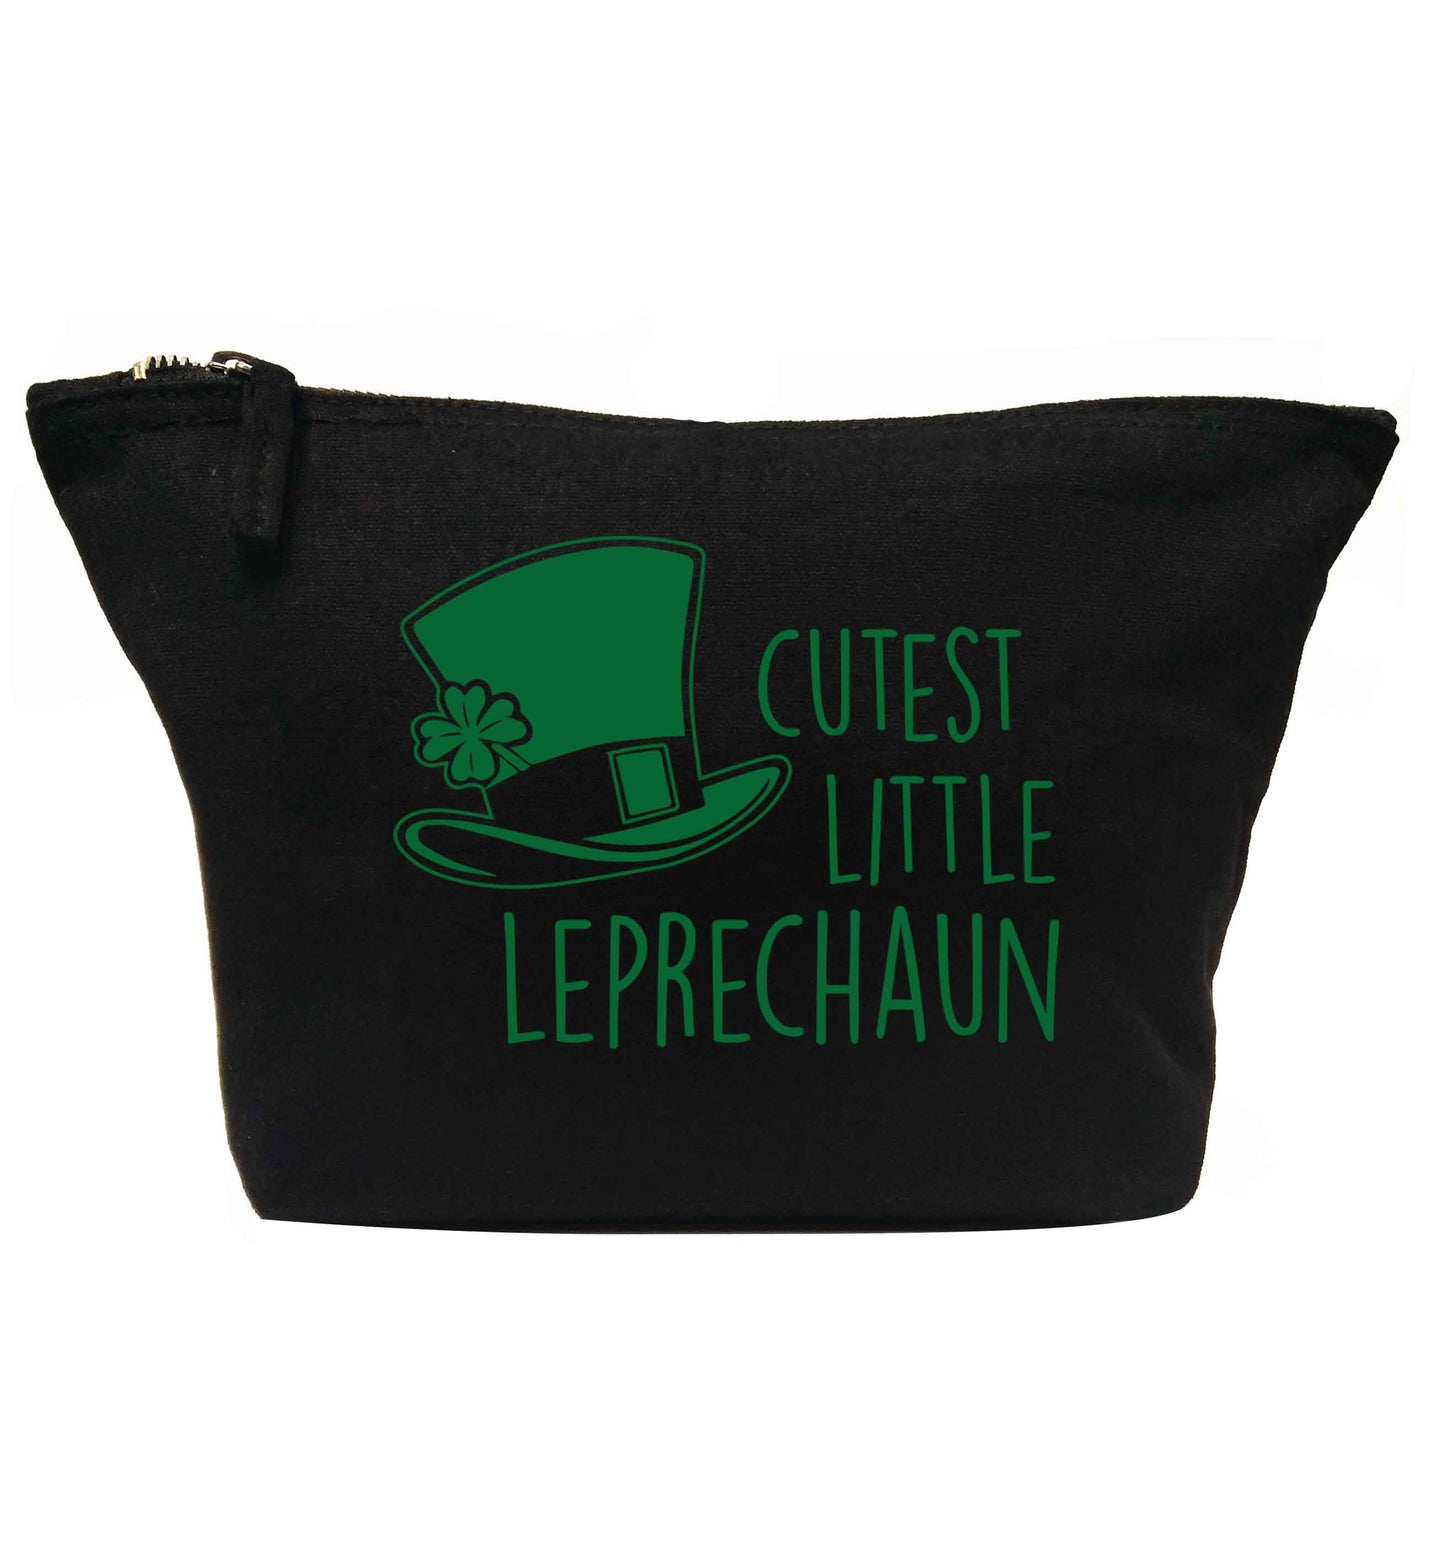 Cutest little leprechaun | Makeup / wash bag